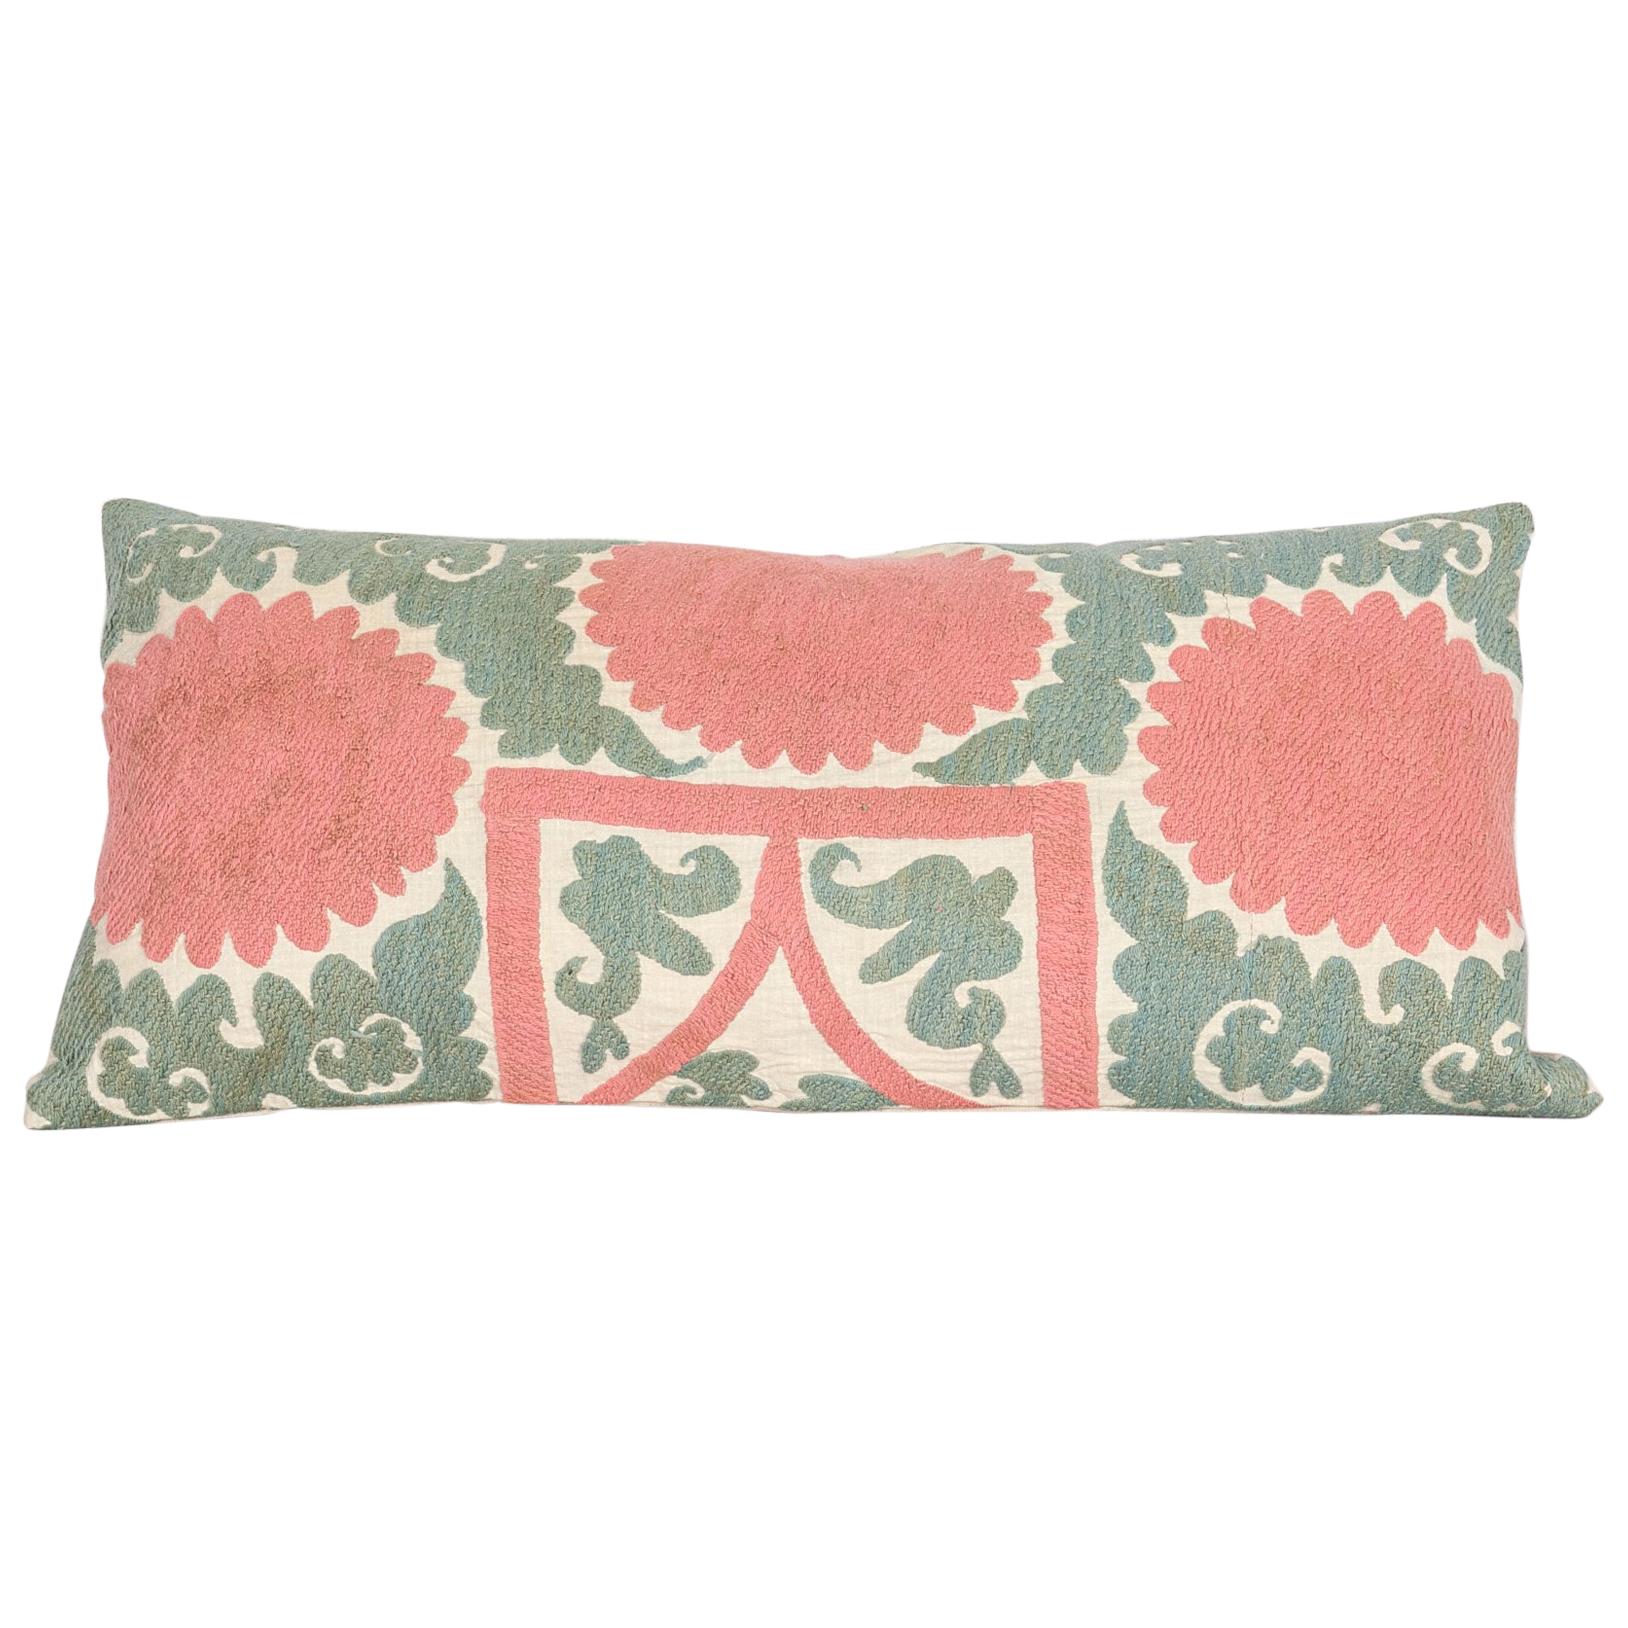 Suzani Lumbar Pillow Case Made from a Vintage Uzbek Suzani, Mid-20th Century